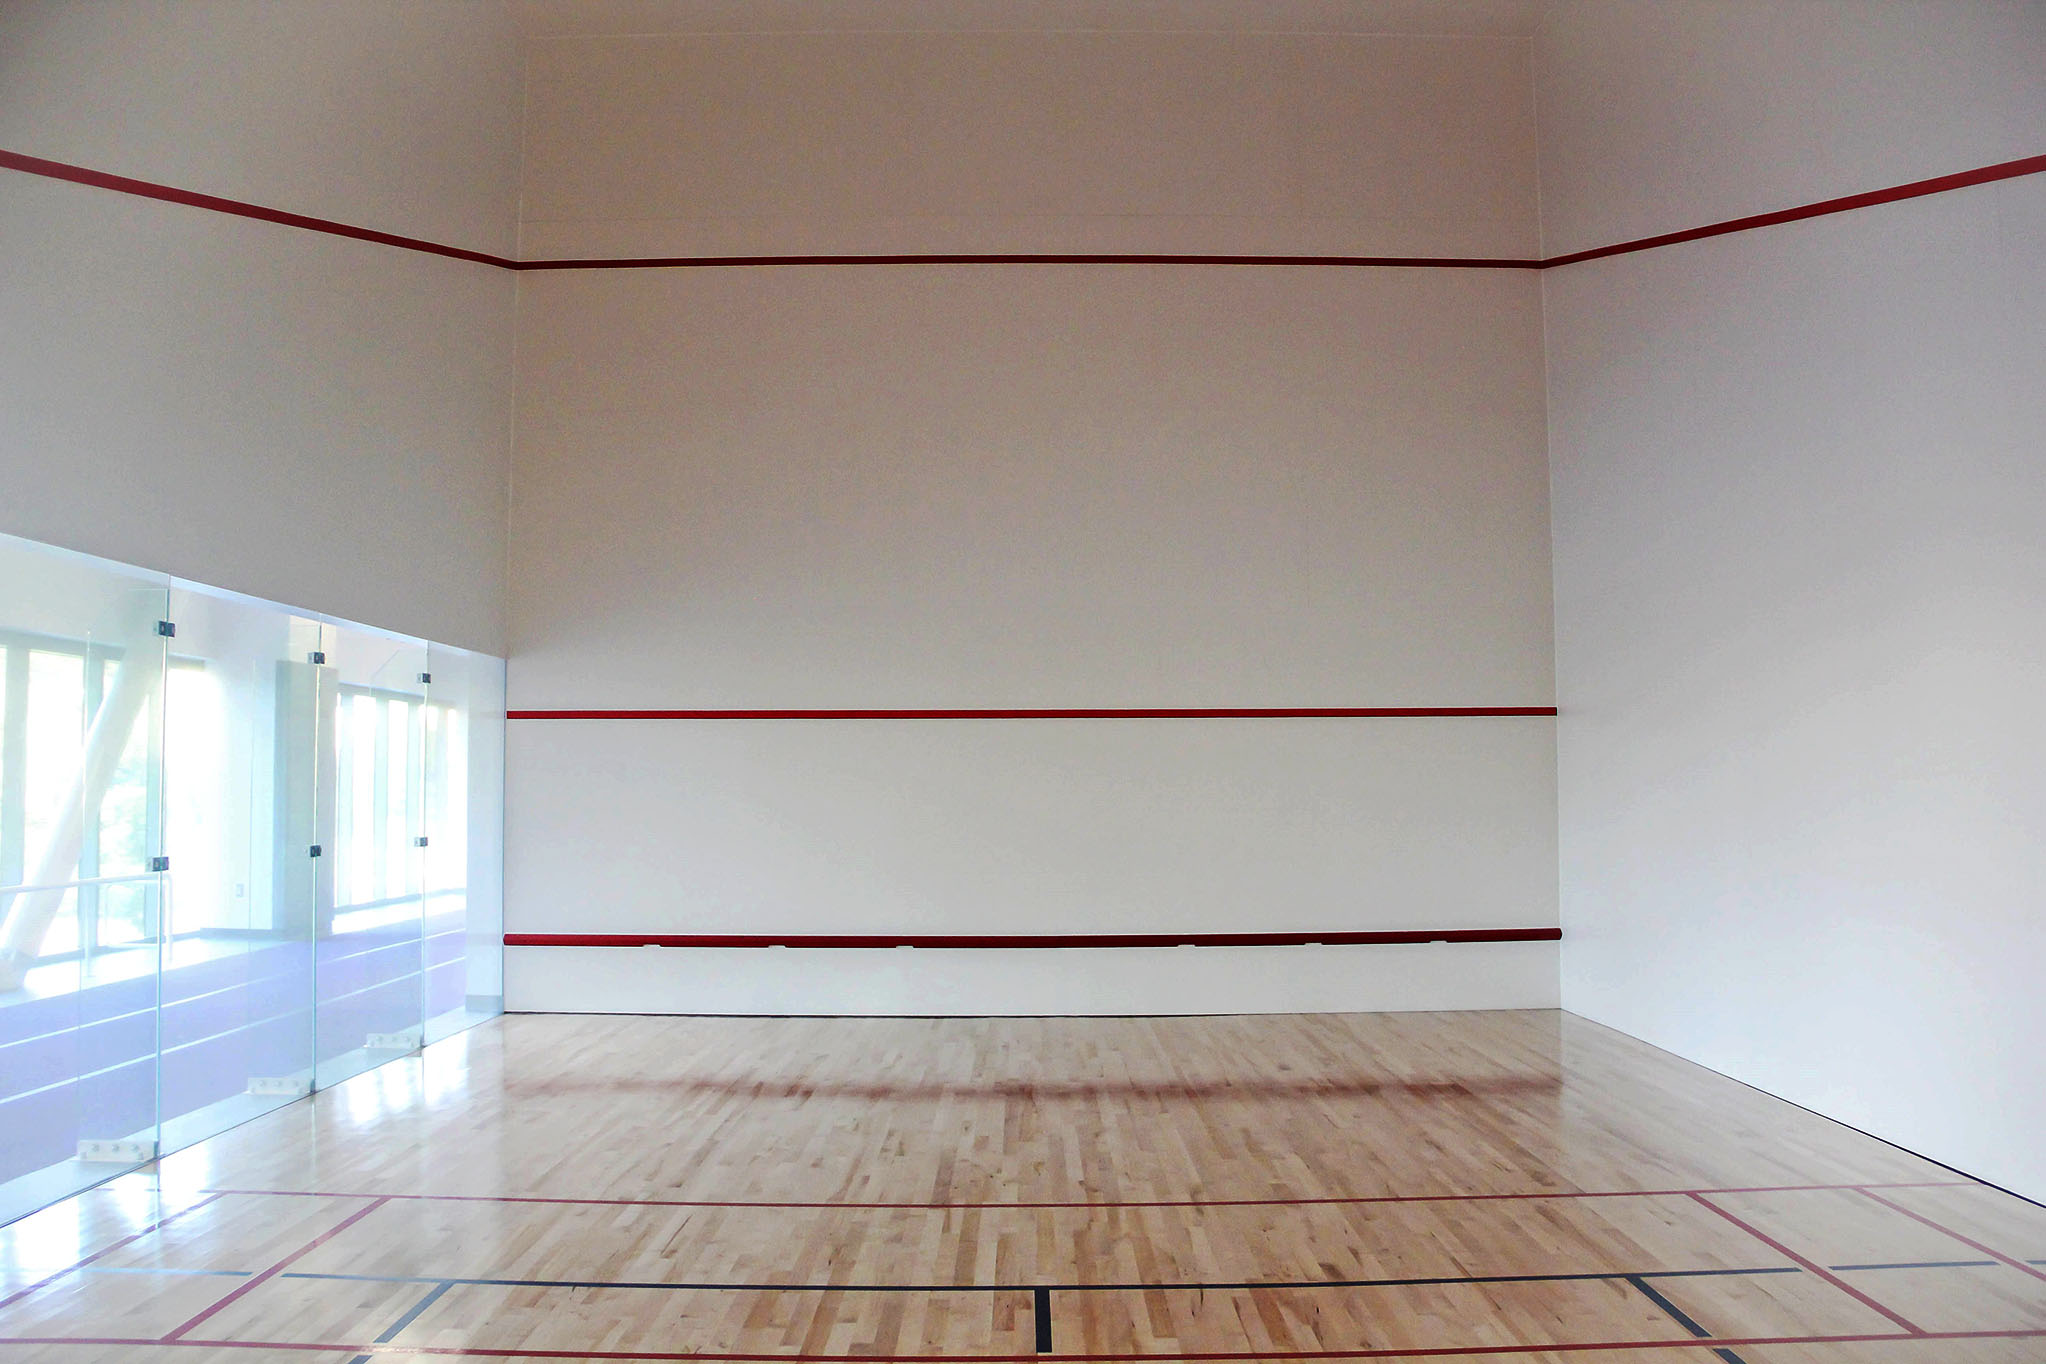 Mashouf Racquetball Courts